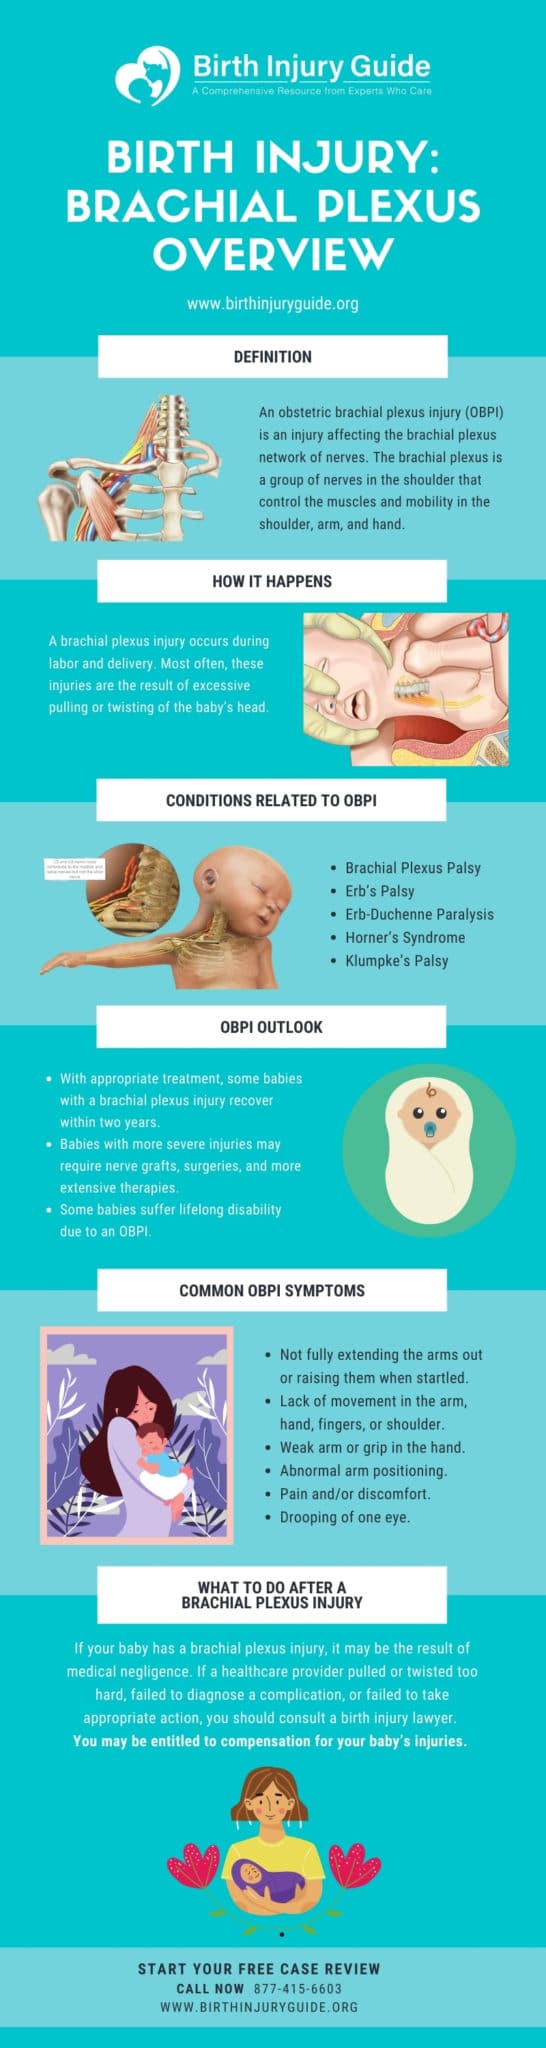 birth injury: brachial plexus